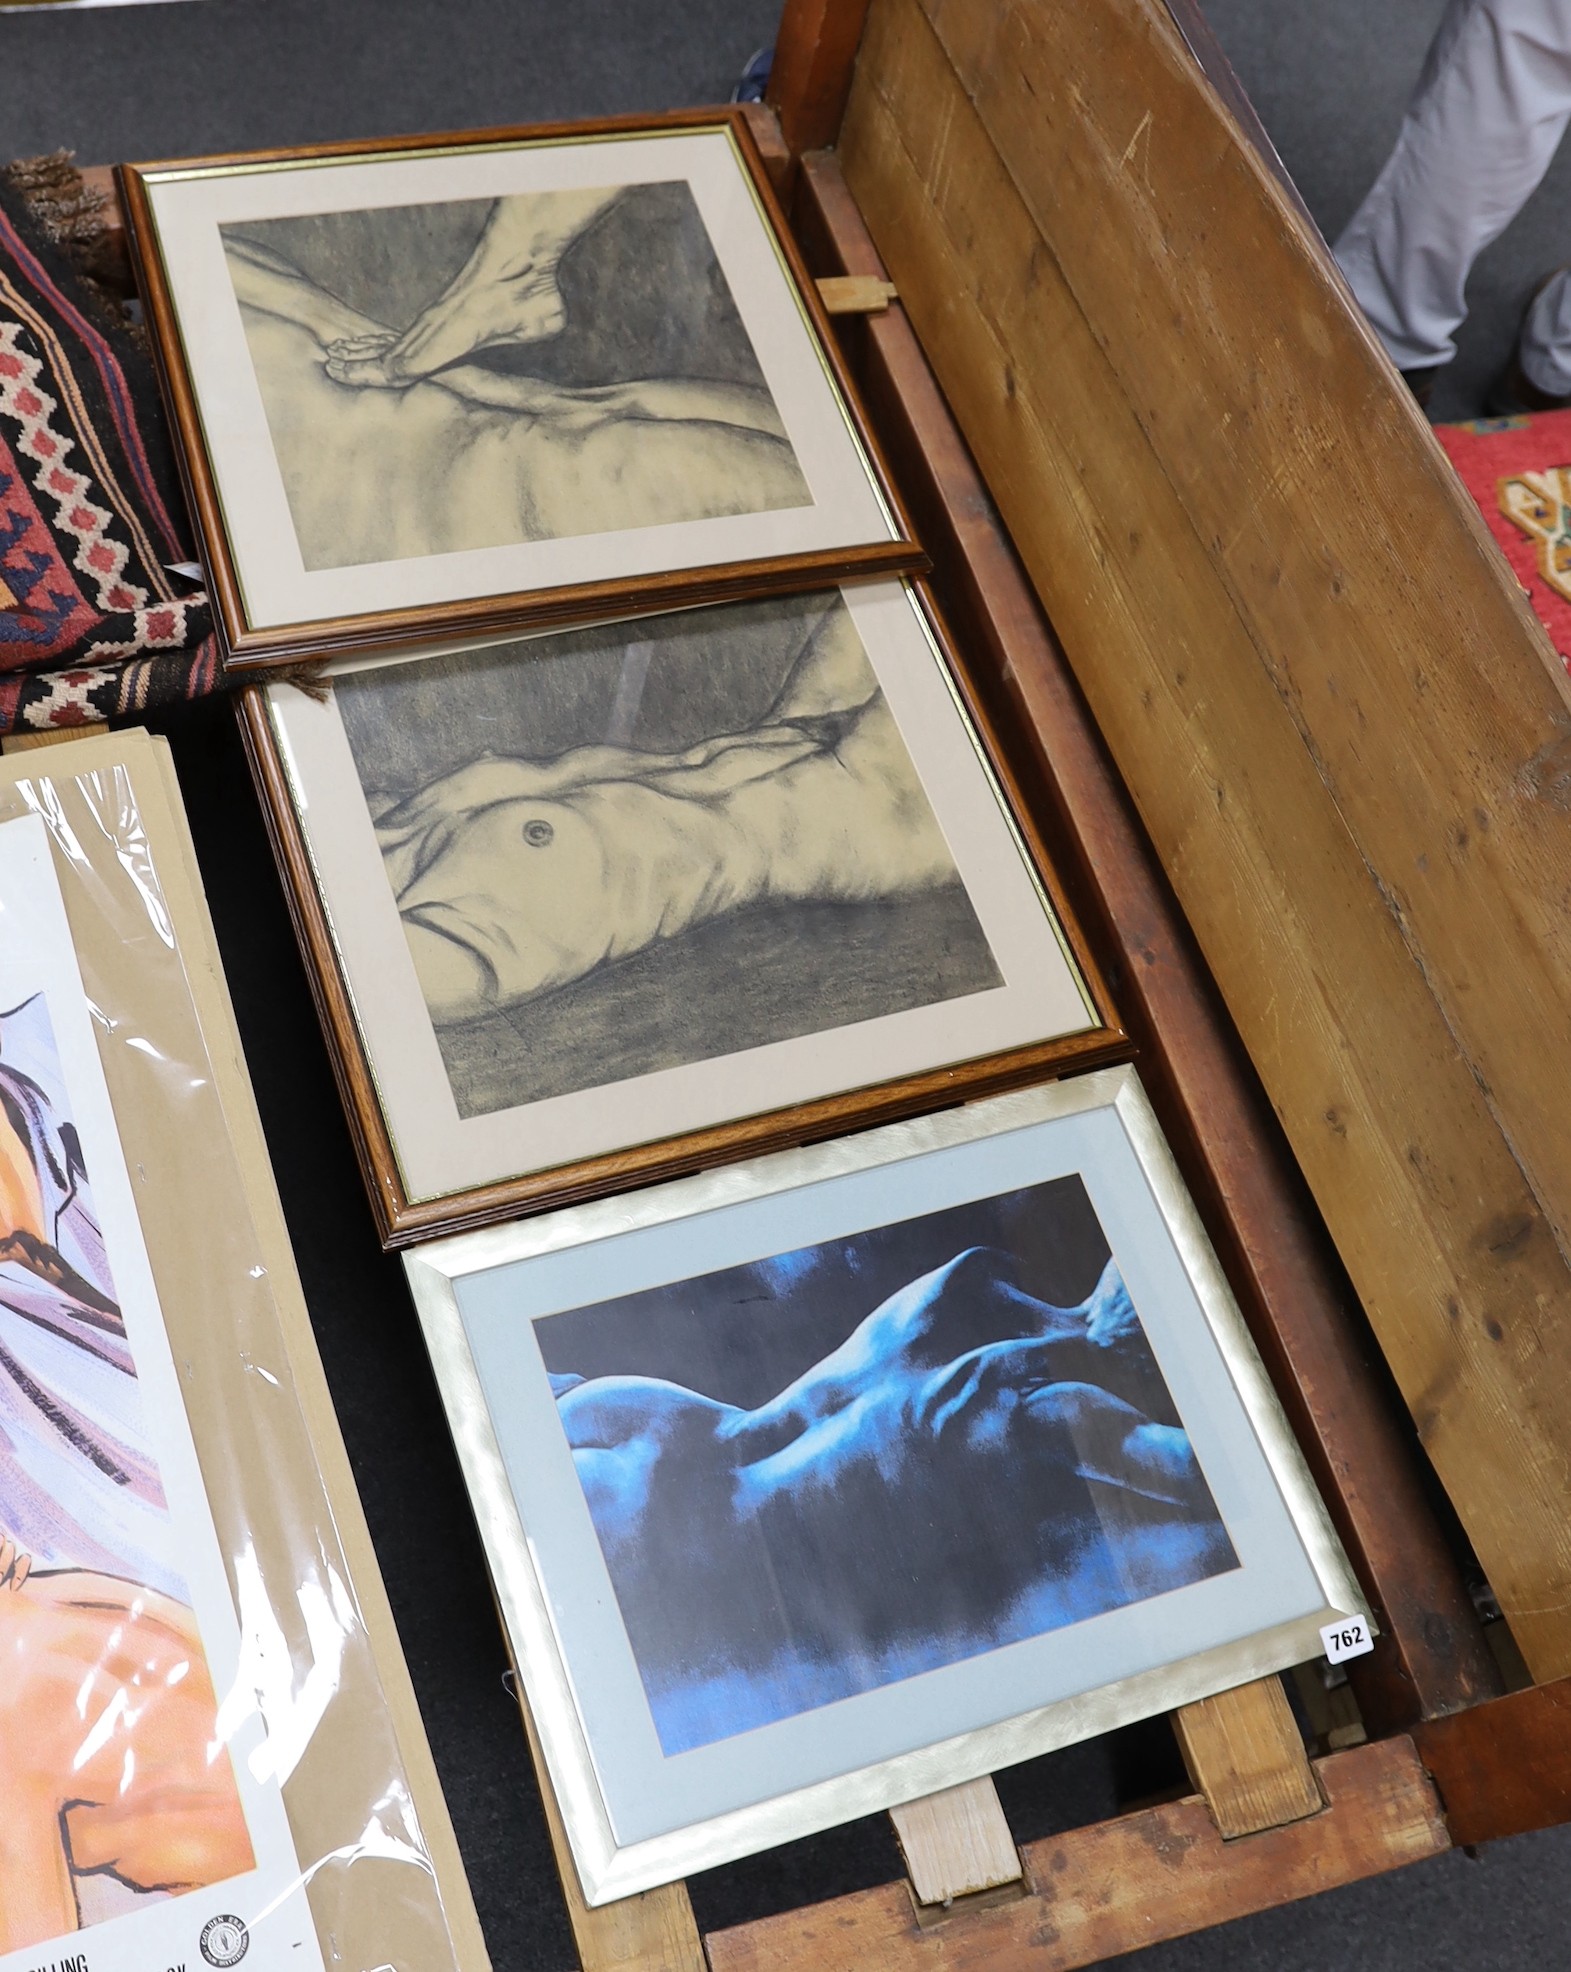 Contemporary British, three prints, reclining nude torso studies, approx 27 x 38cm each